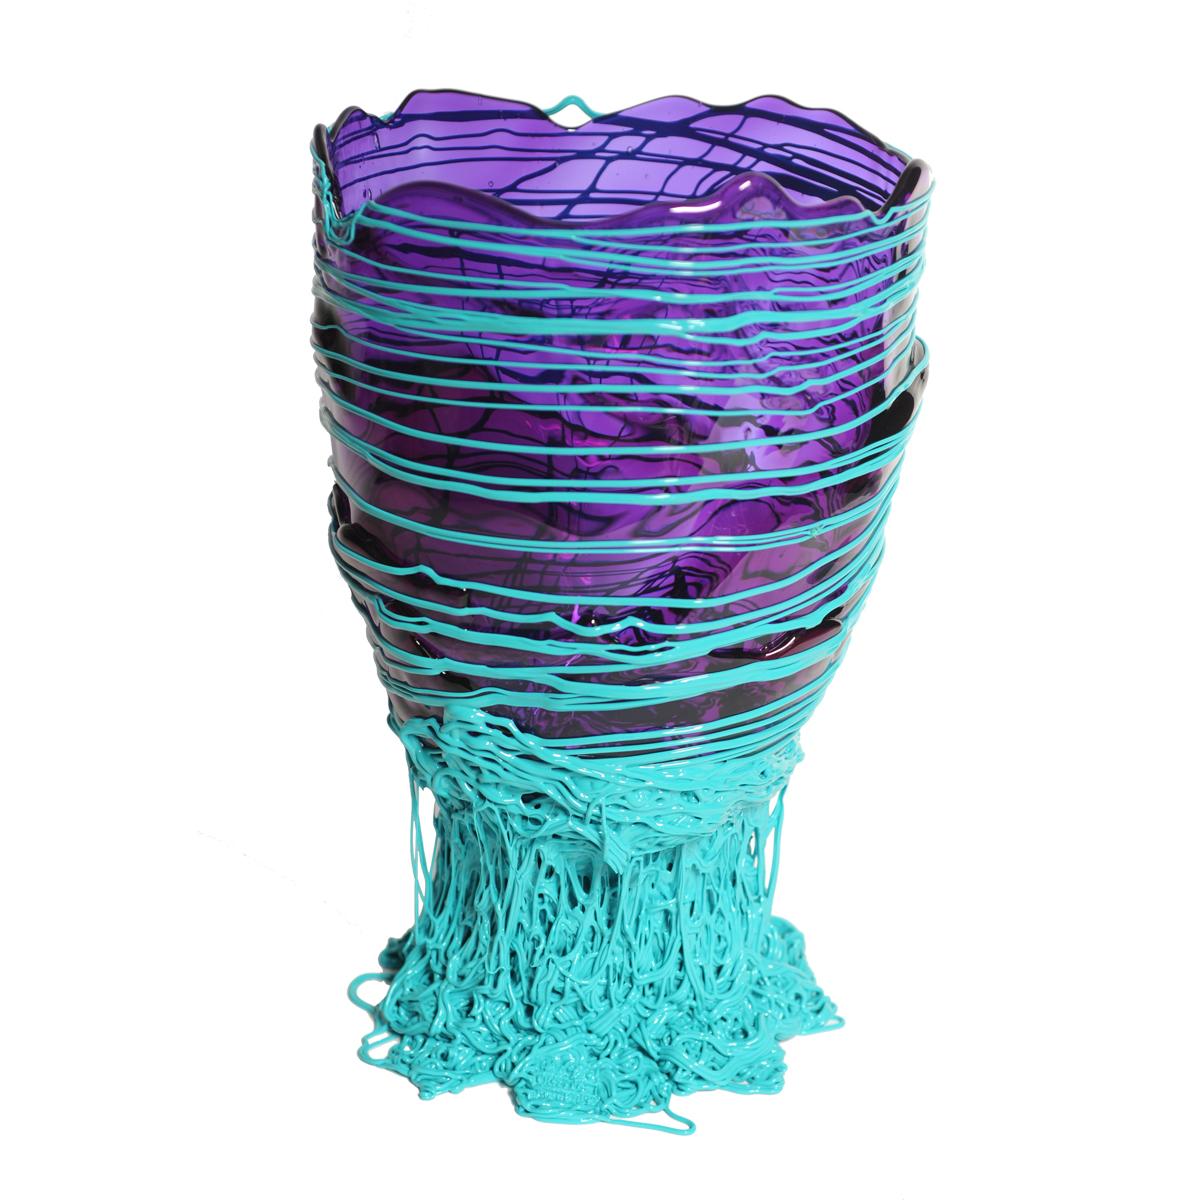 Contemporary Gaetano Pesce Spaghetti L Vase Soft Resin Purple, Turquoise In New Condition For Sale In barasso, IT